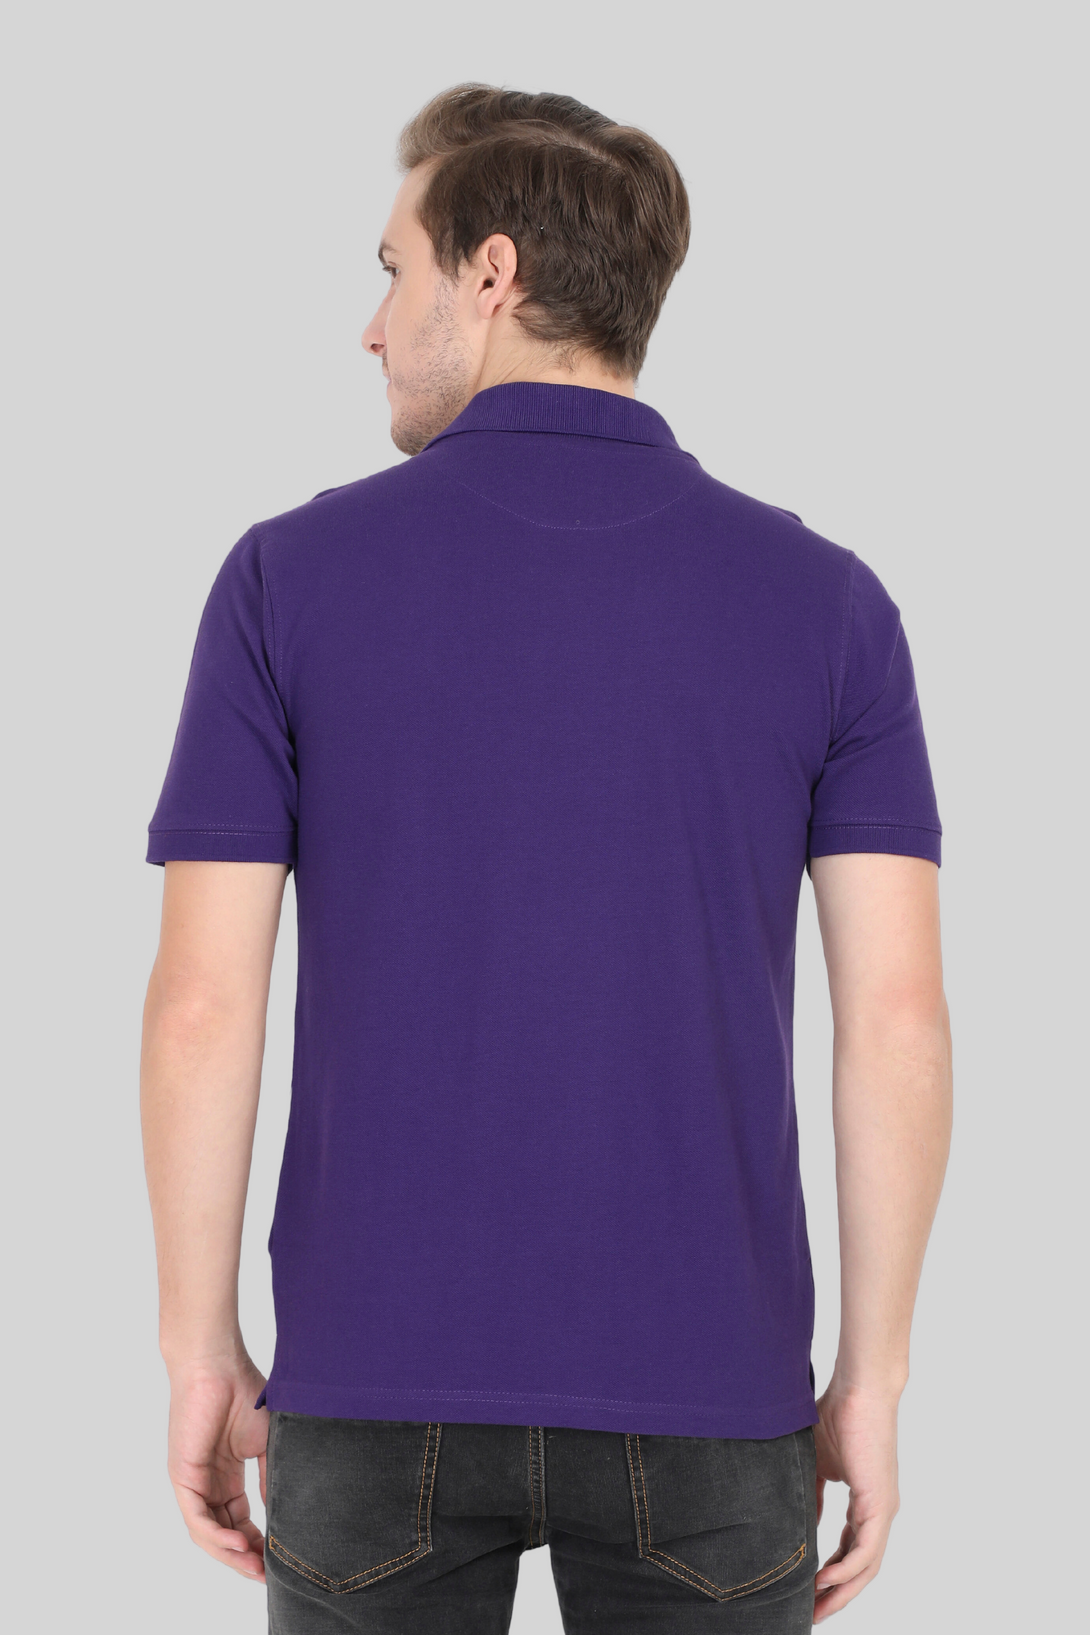 Purple Polo T-Shirt For Men - WowWaves - 7